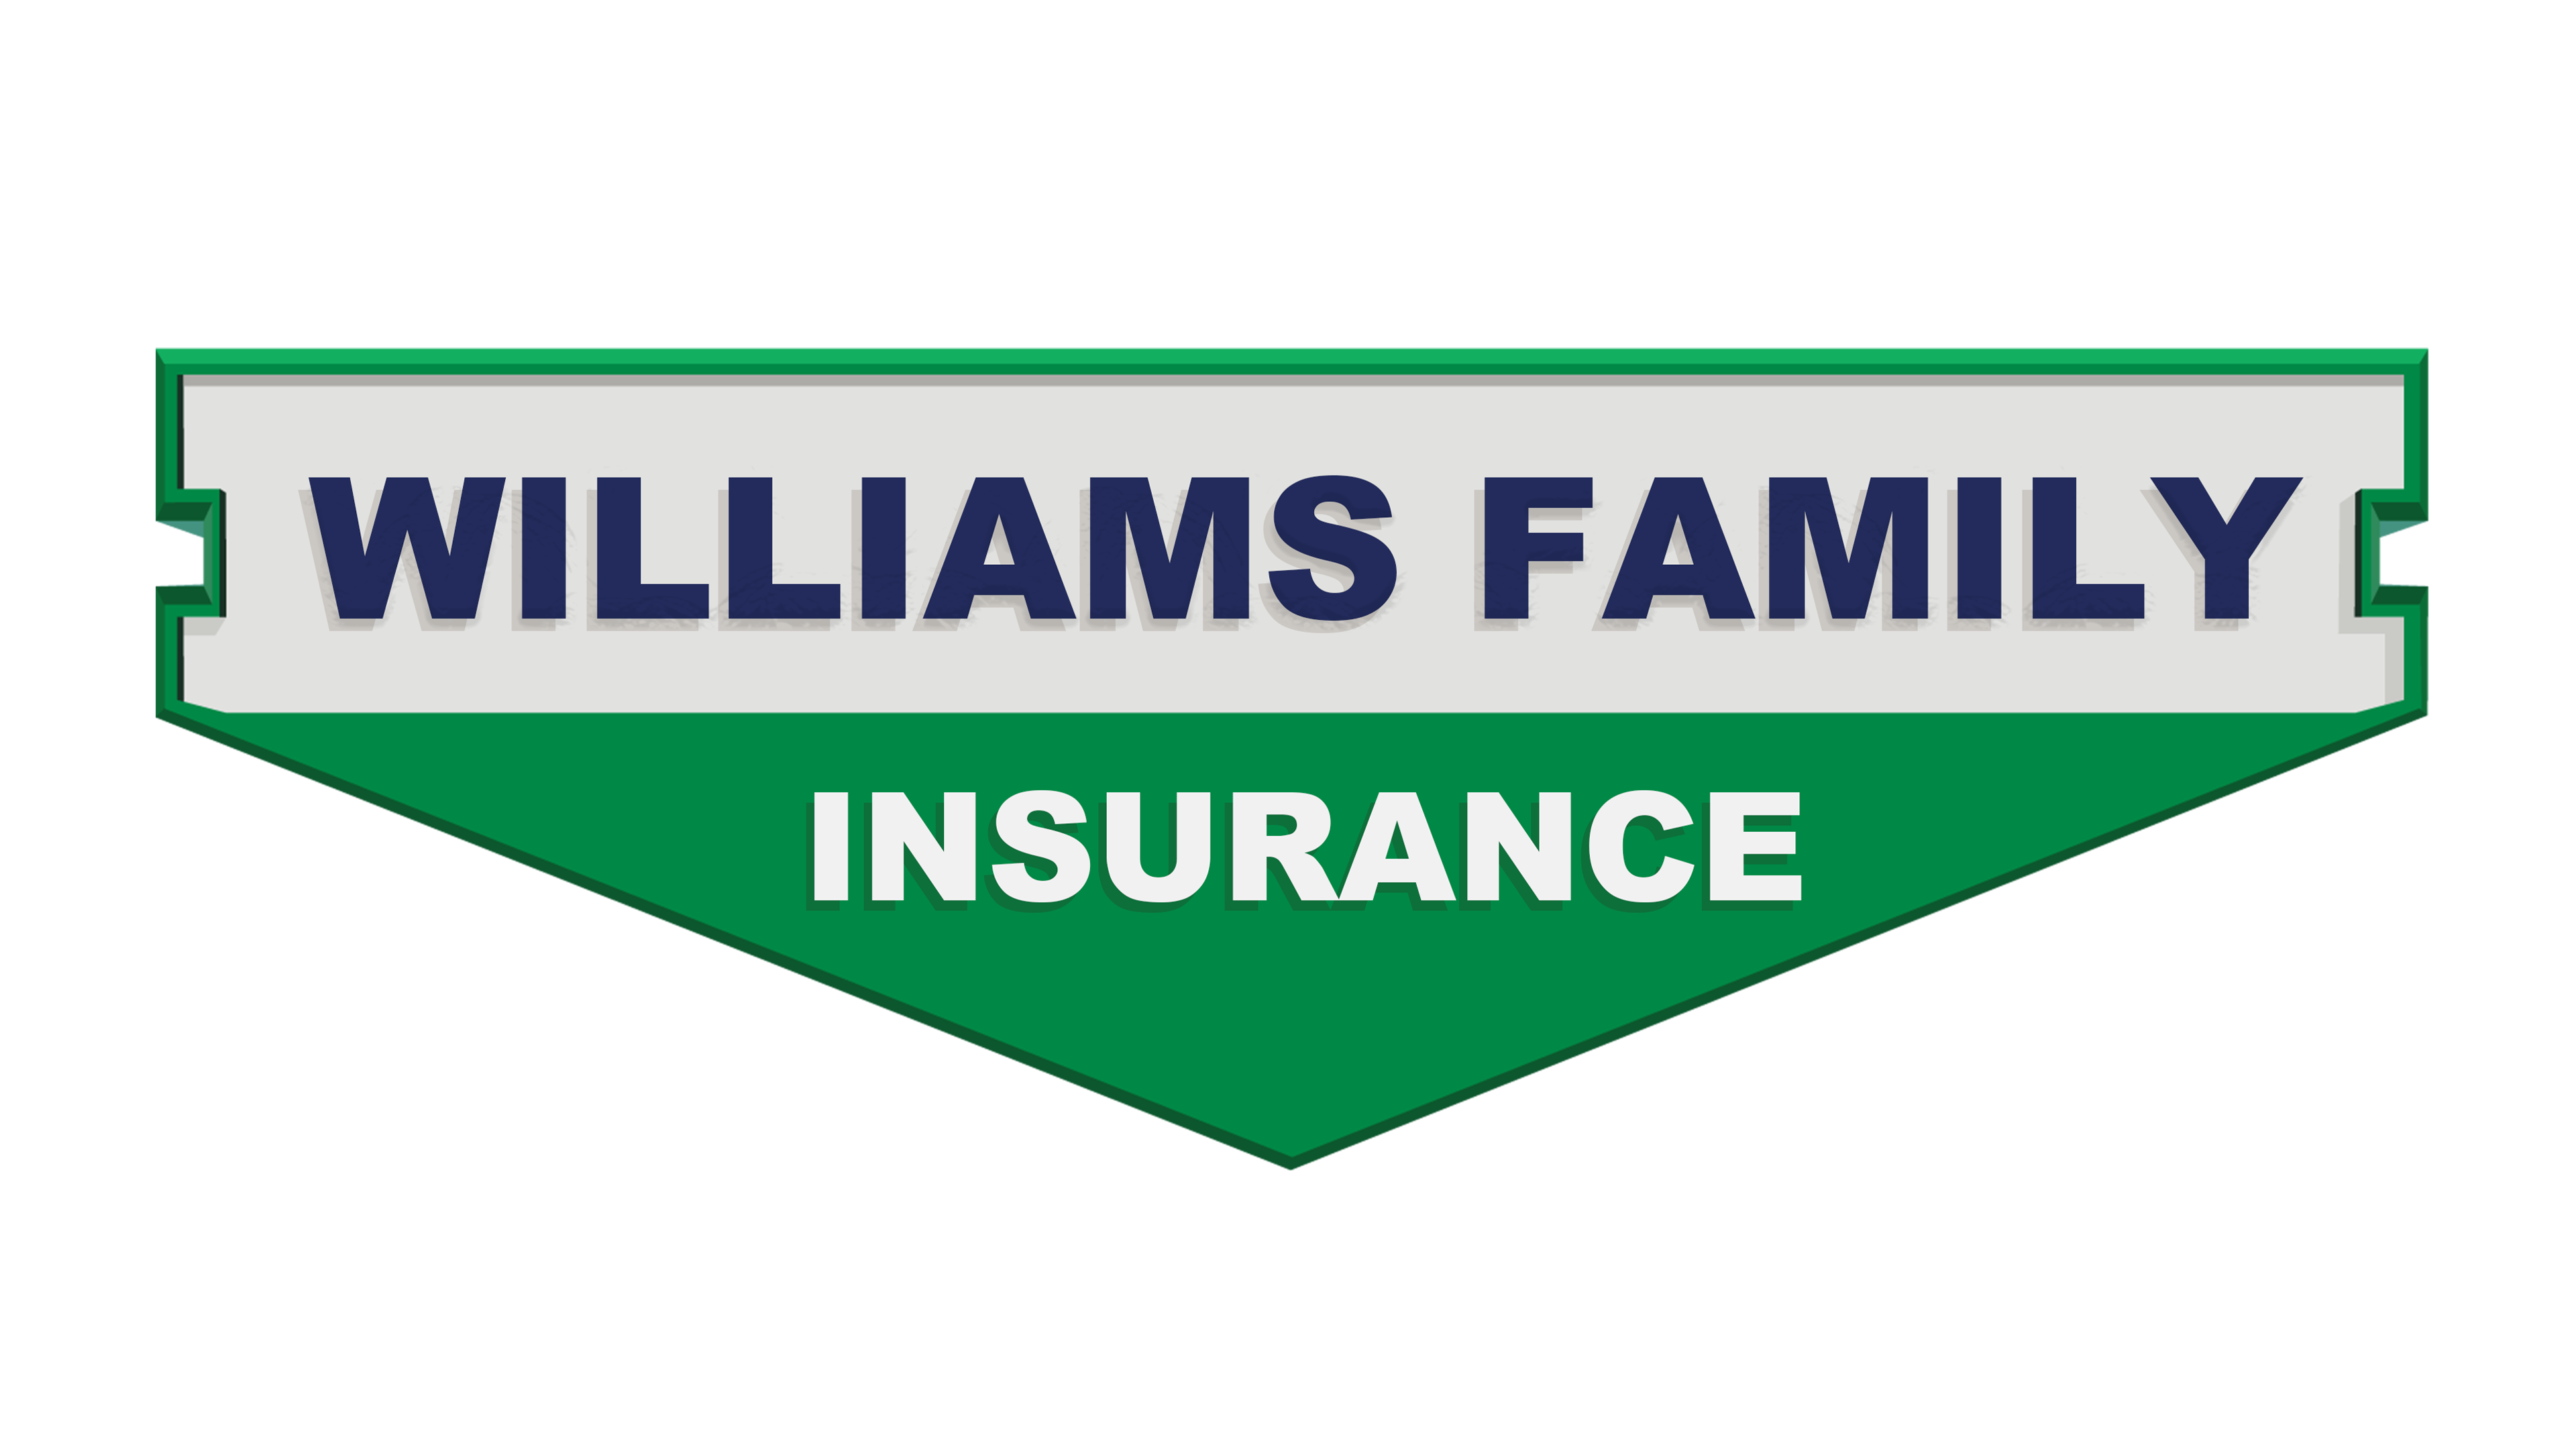 Williams Famiy Insurance in Cincinnati, OH - Beechmont Ford Inc